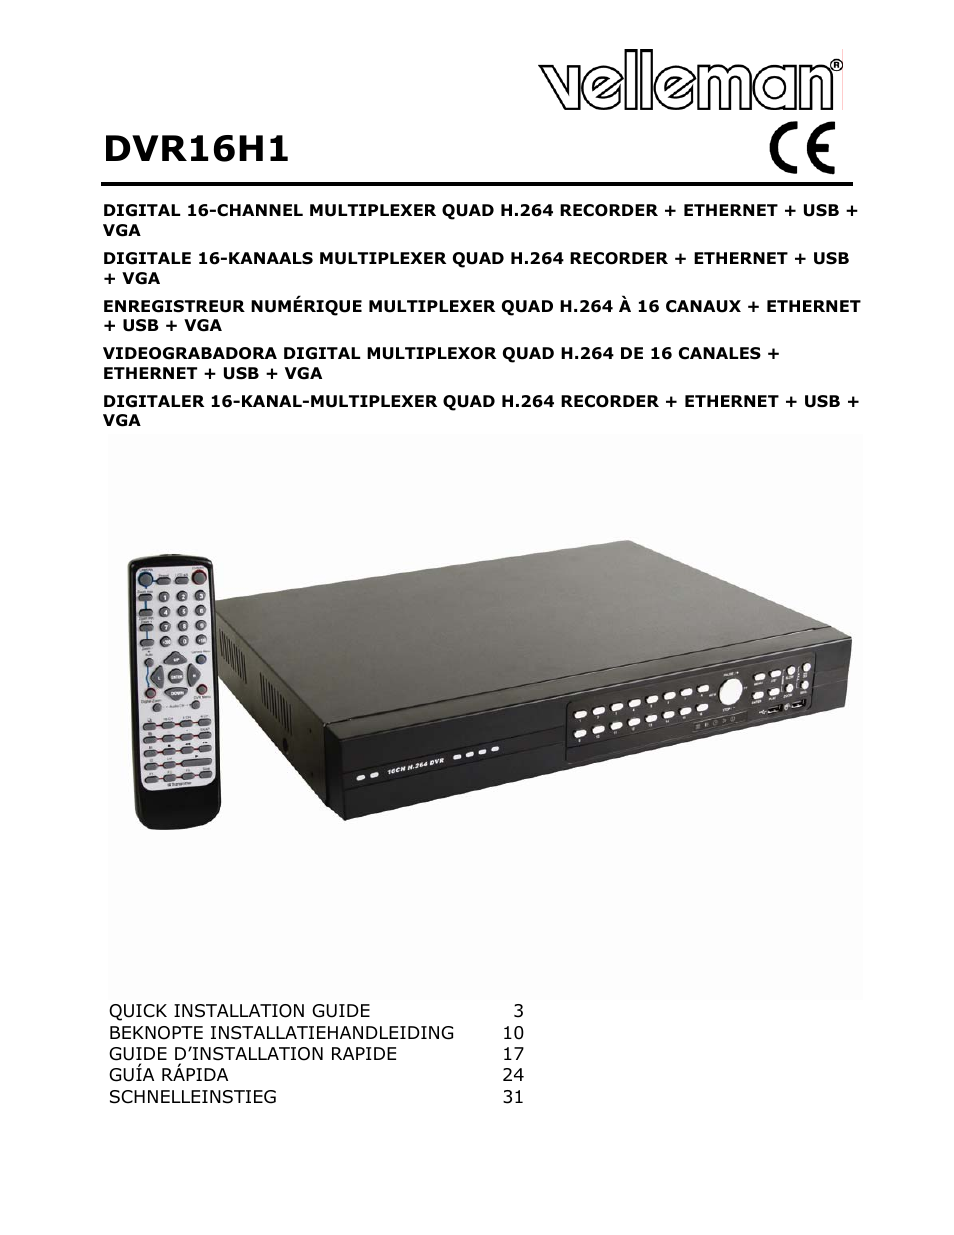 DVR16H1 Quick Installation Guide